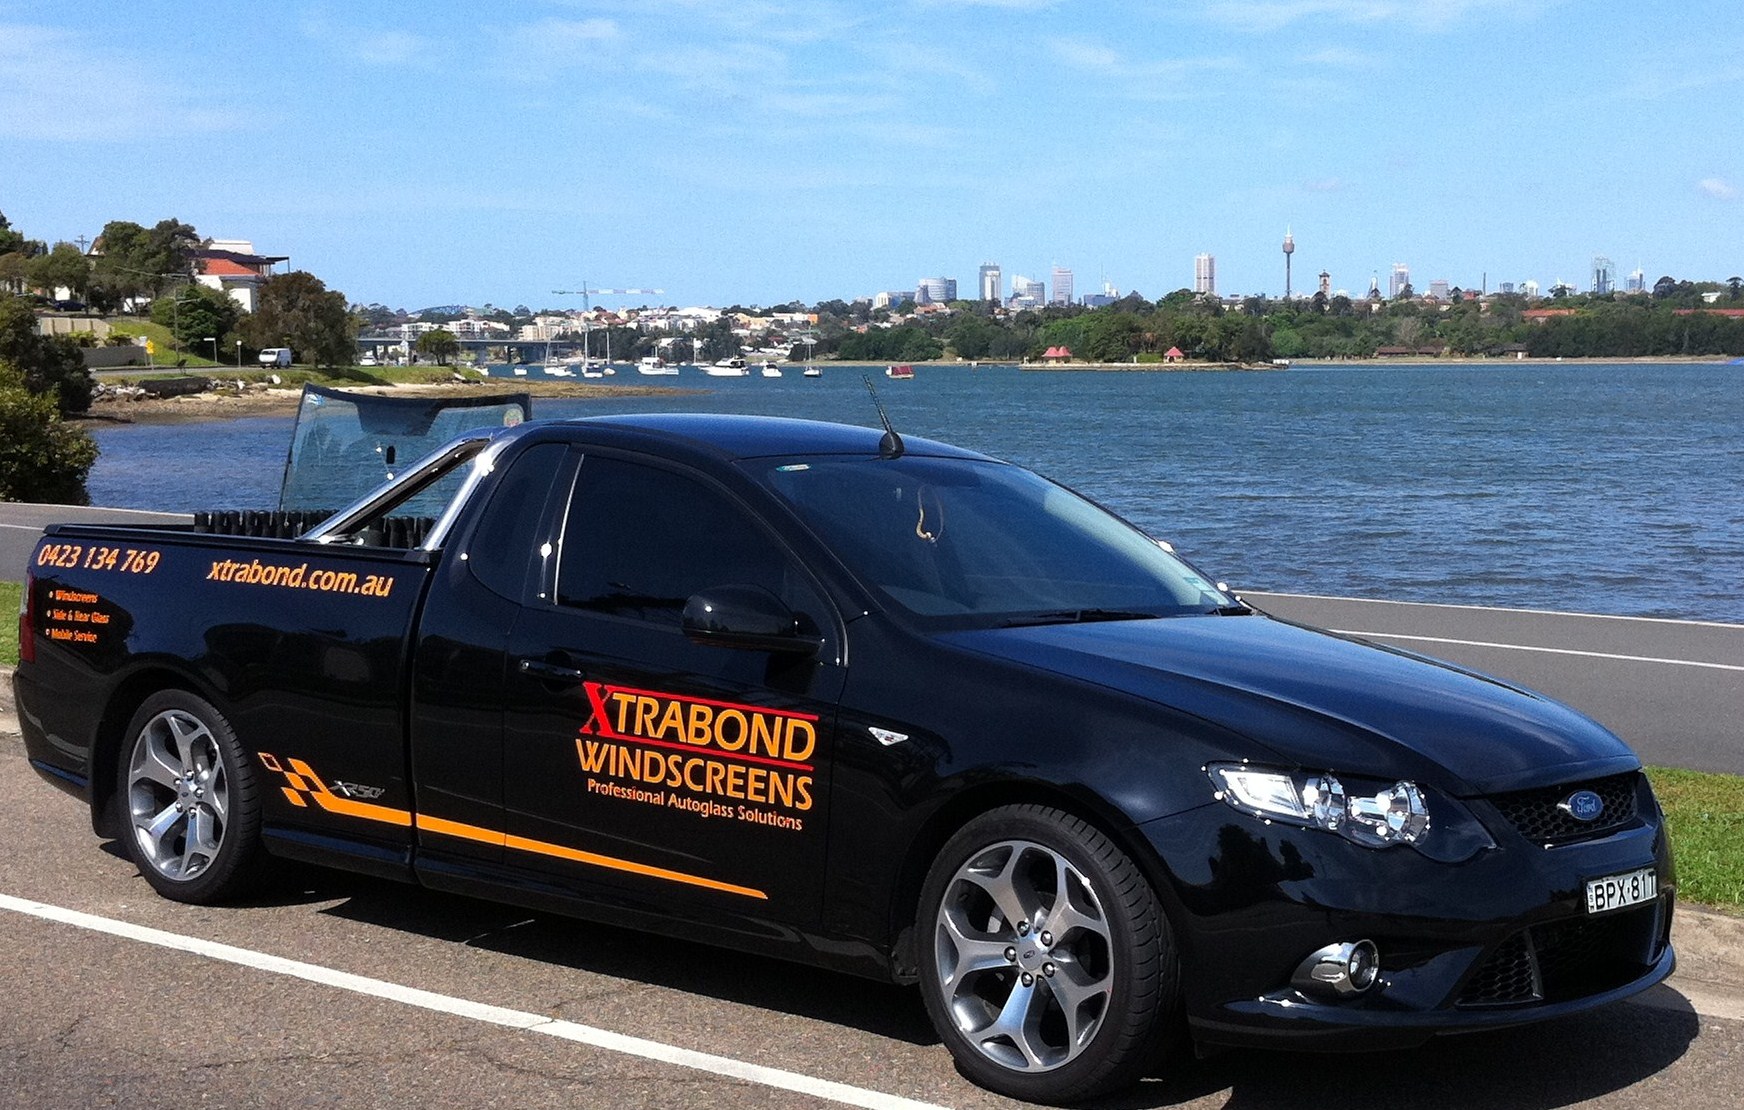 Xtrabond Windscreens Australia